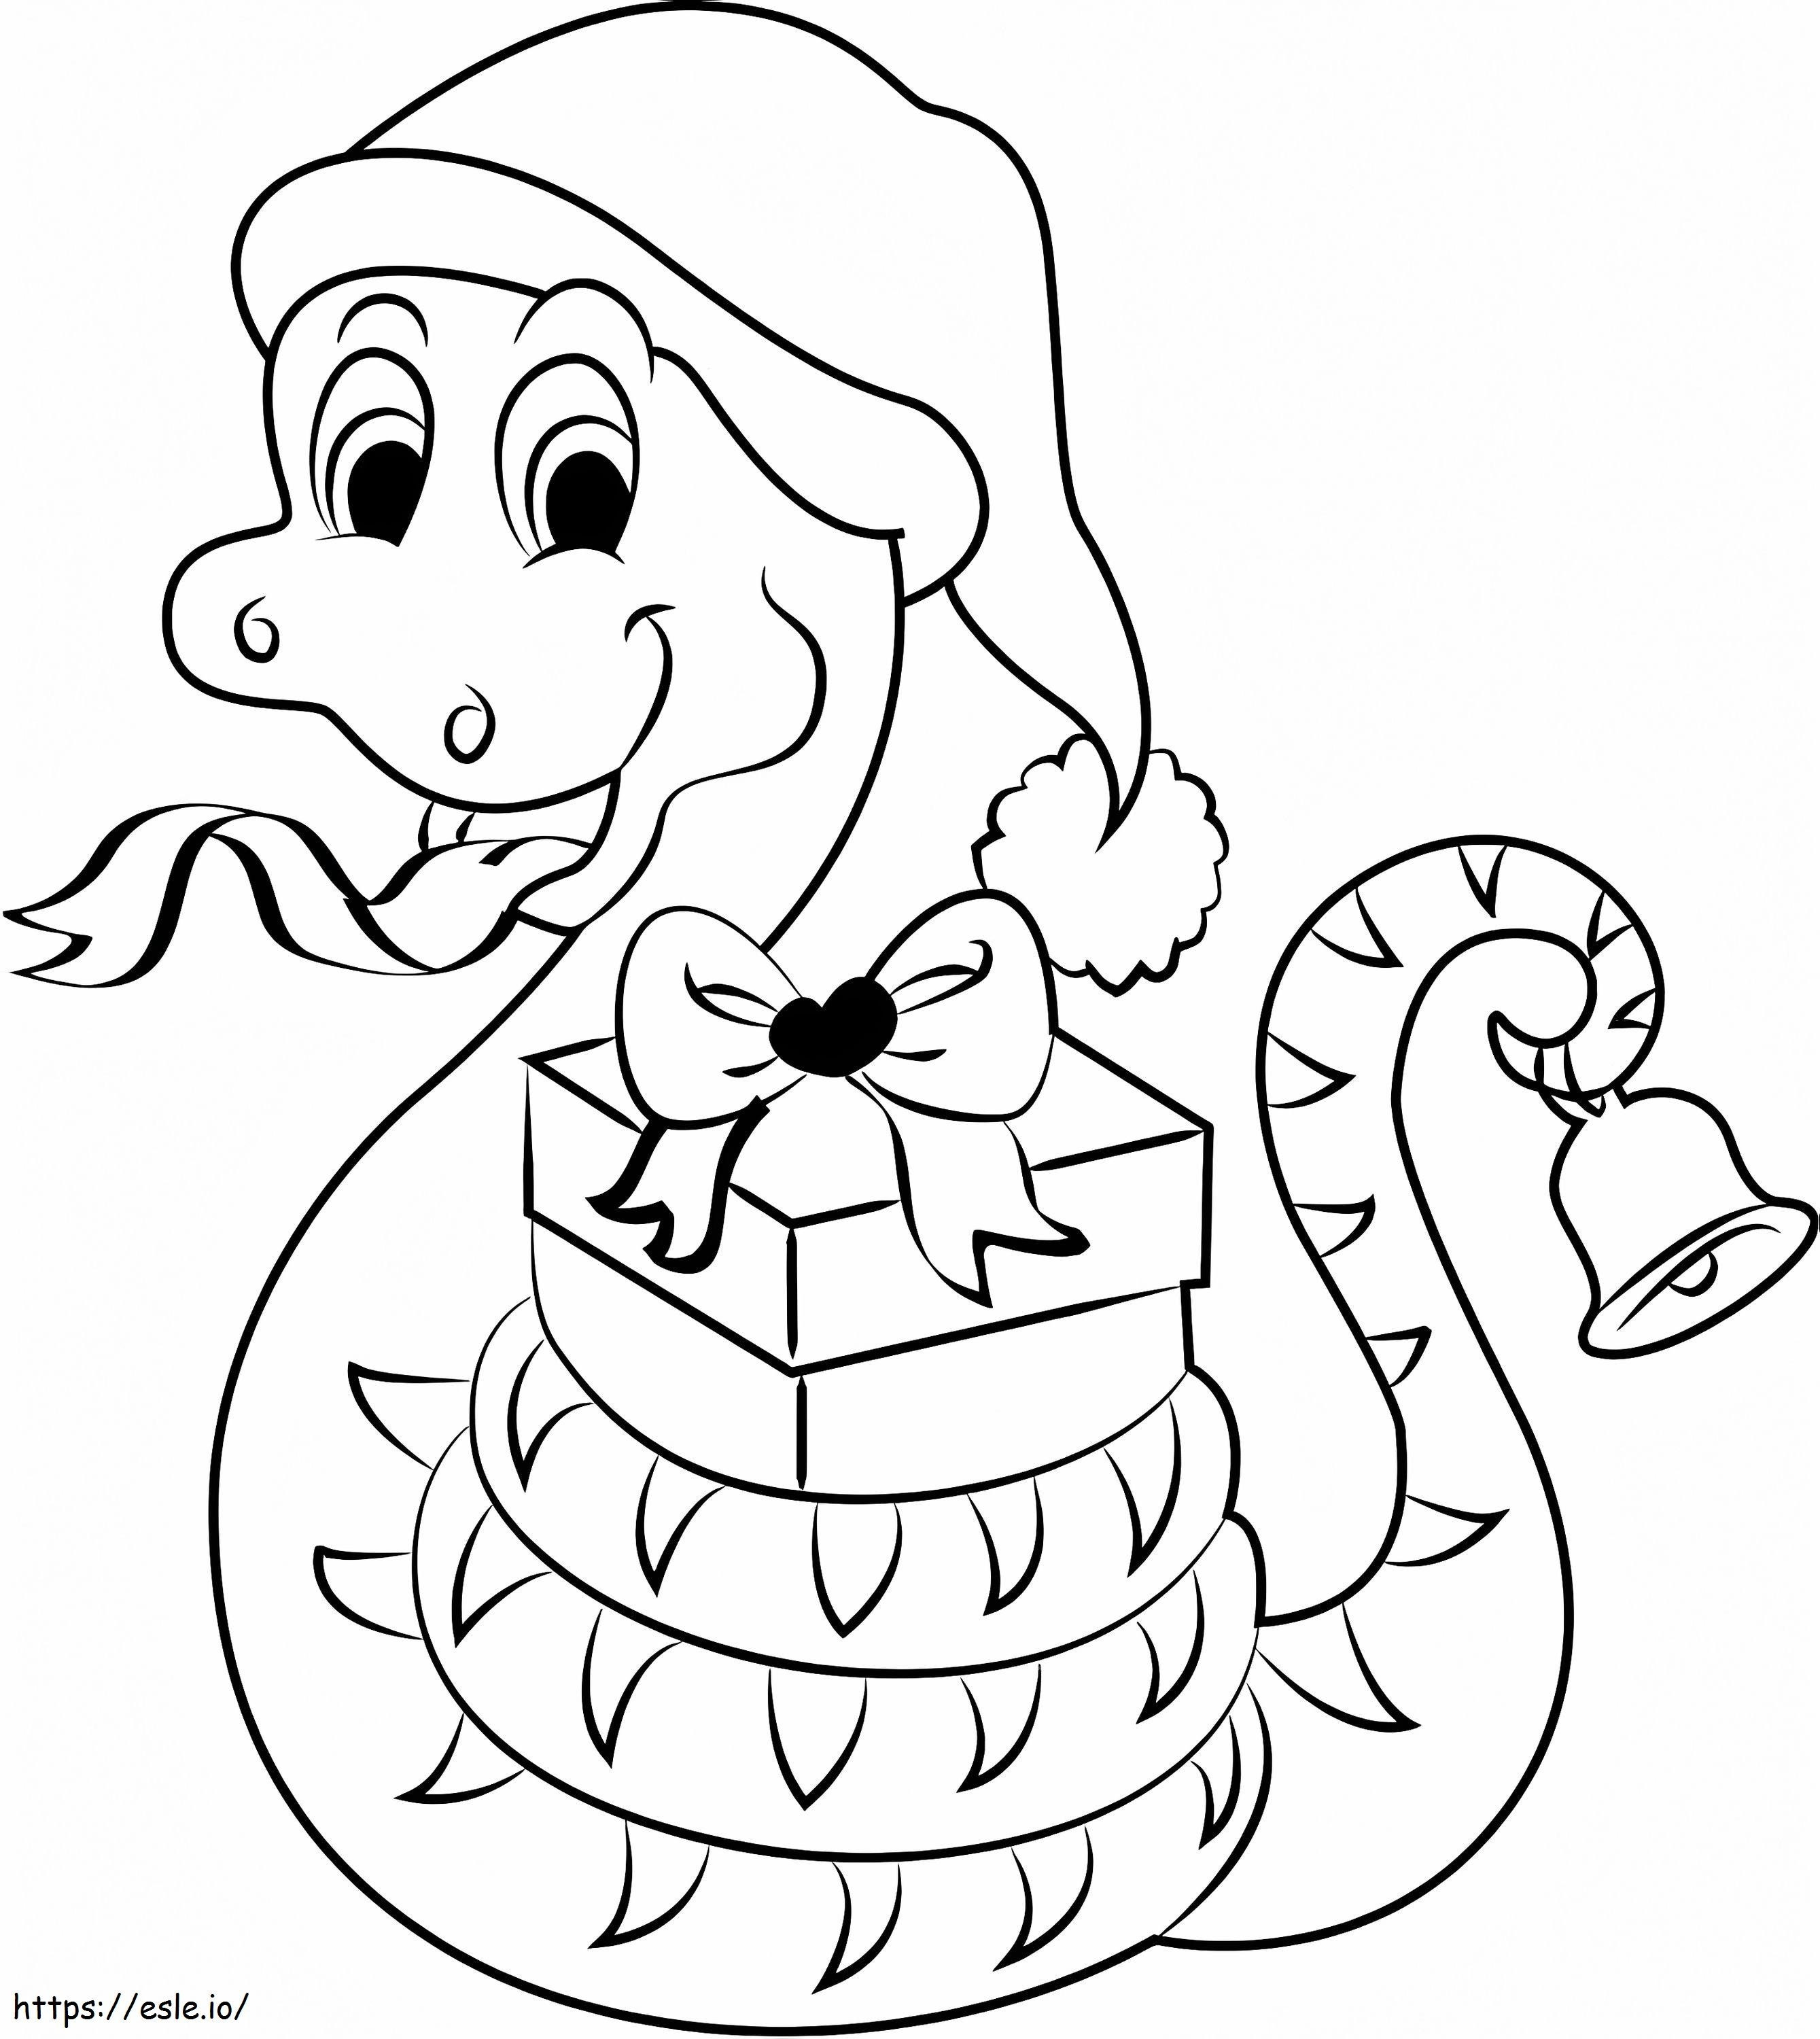 Christmas Snake 1 coloring page